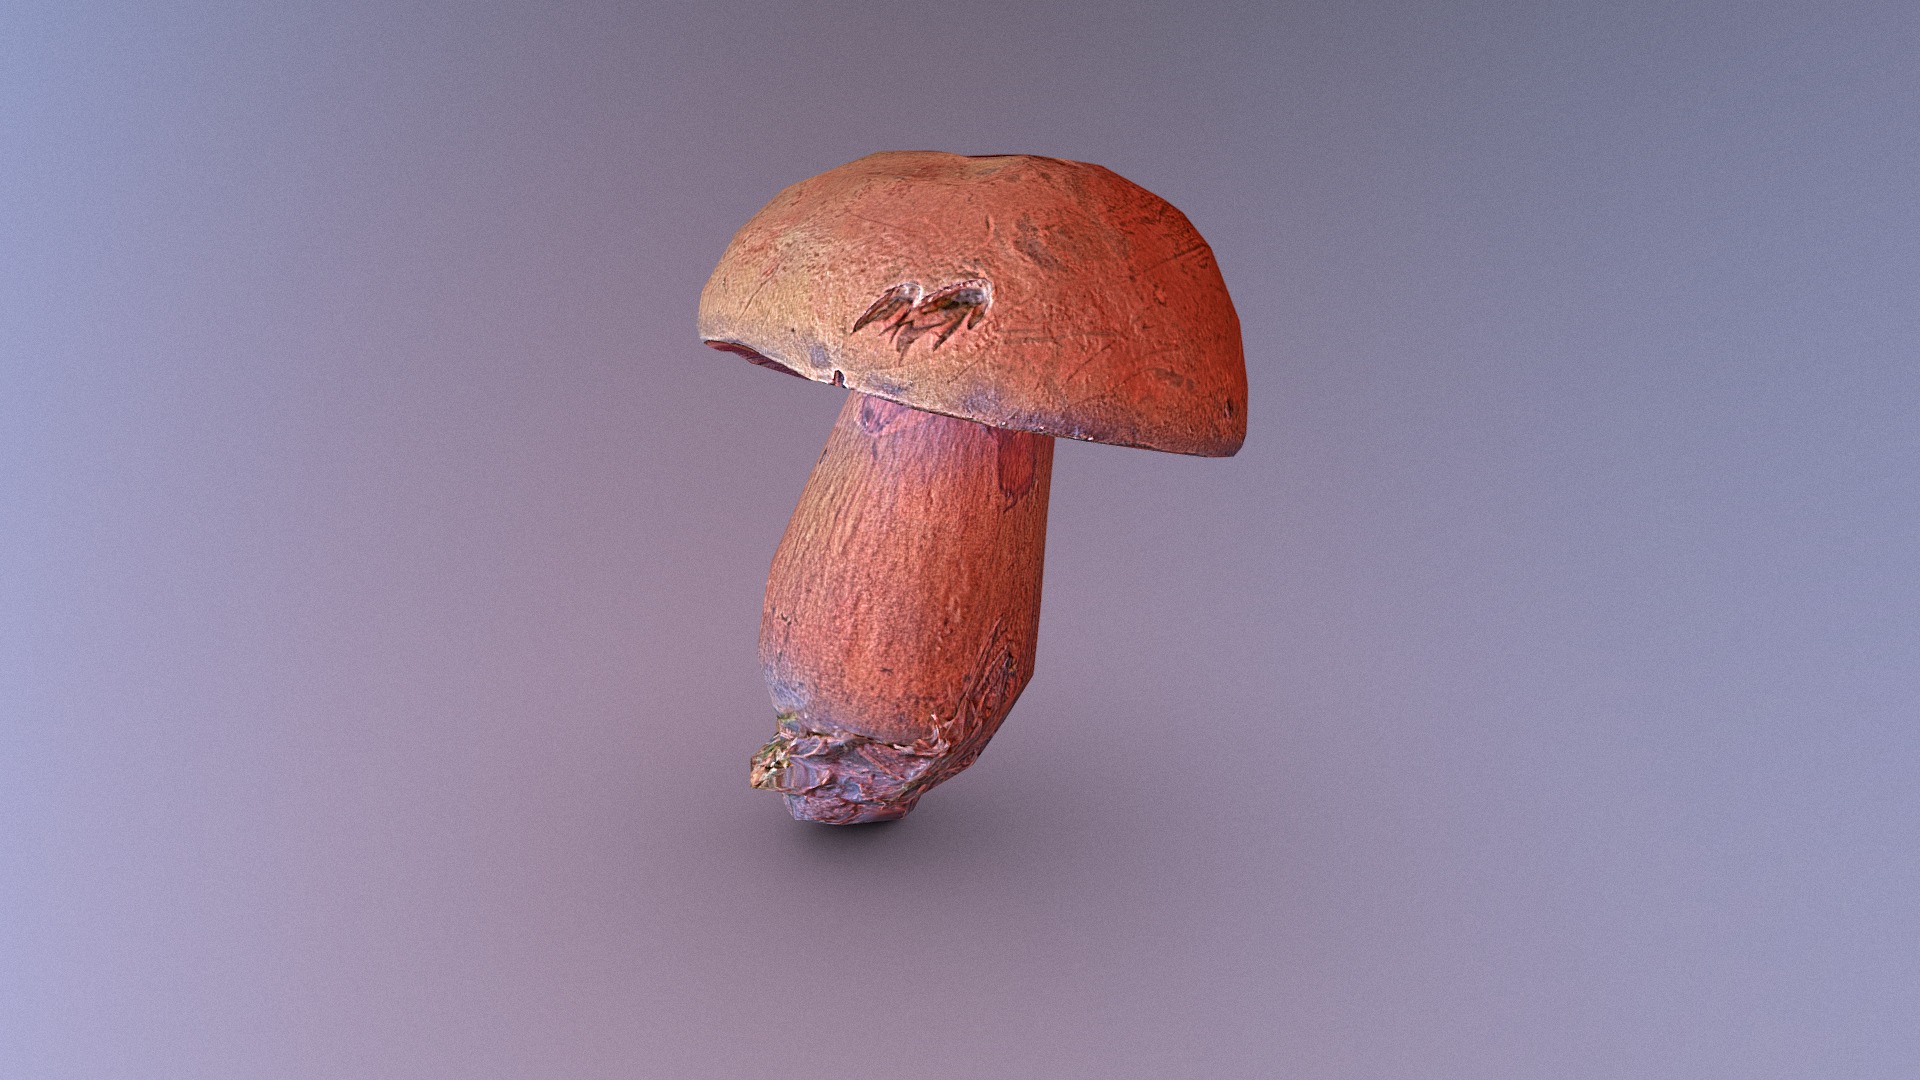 3D model Photorealistic mushroom some sort of Boletus - This is a 3D model of the Photorealistic mushroom some sort of Boletus. The 3D model is about a close-up of a mushroom.